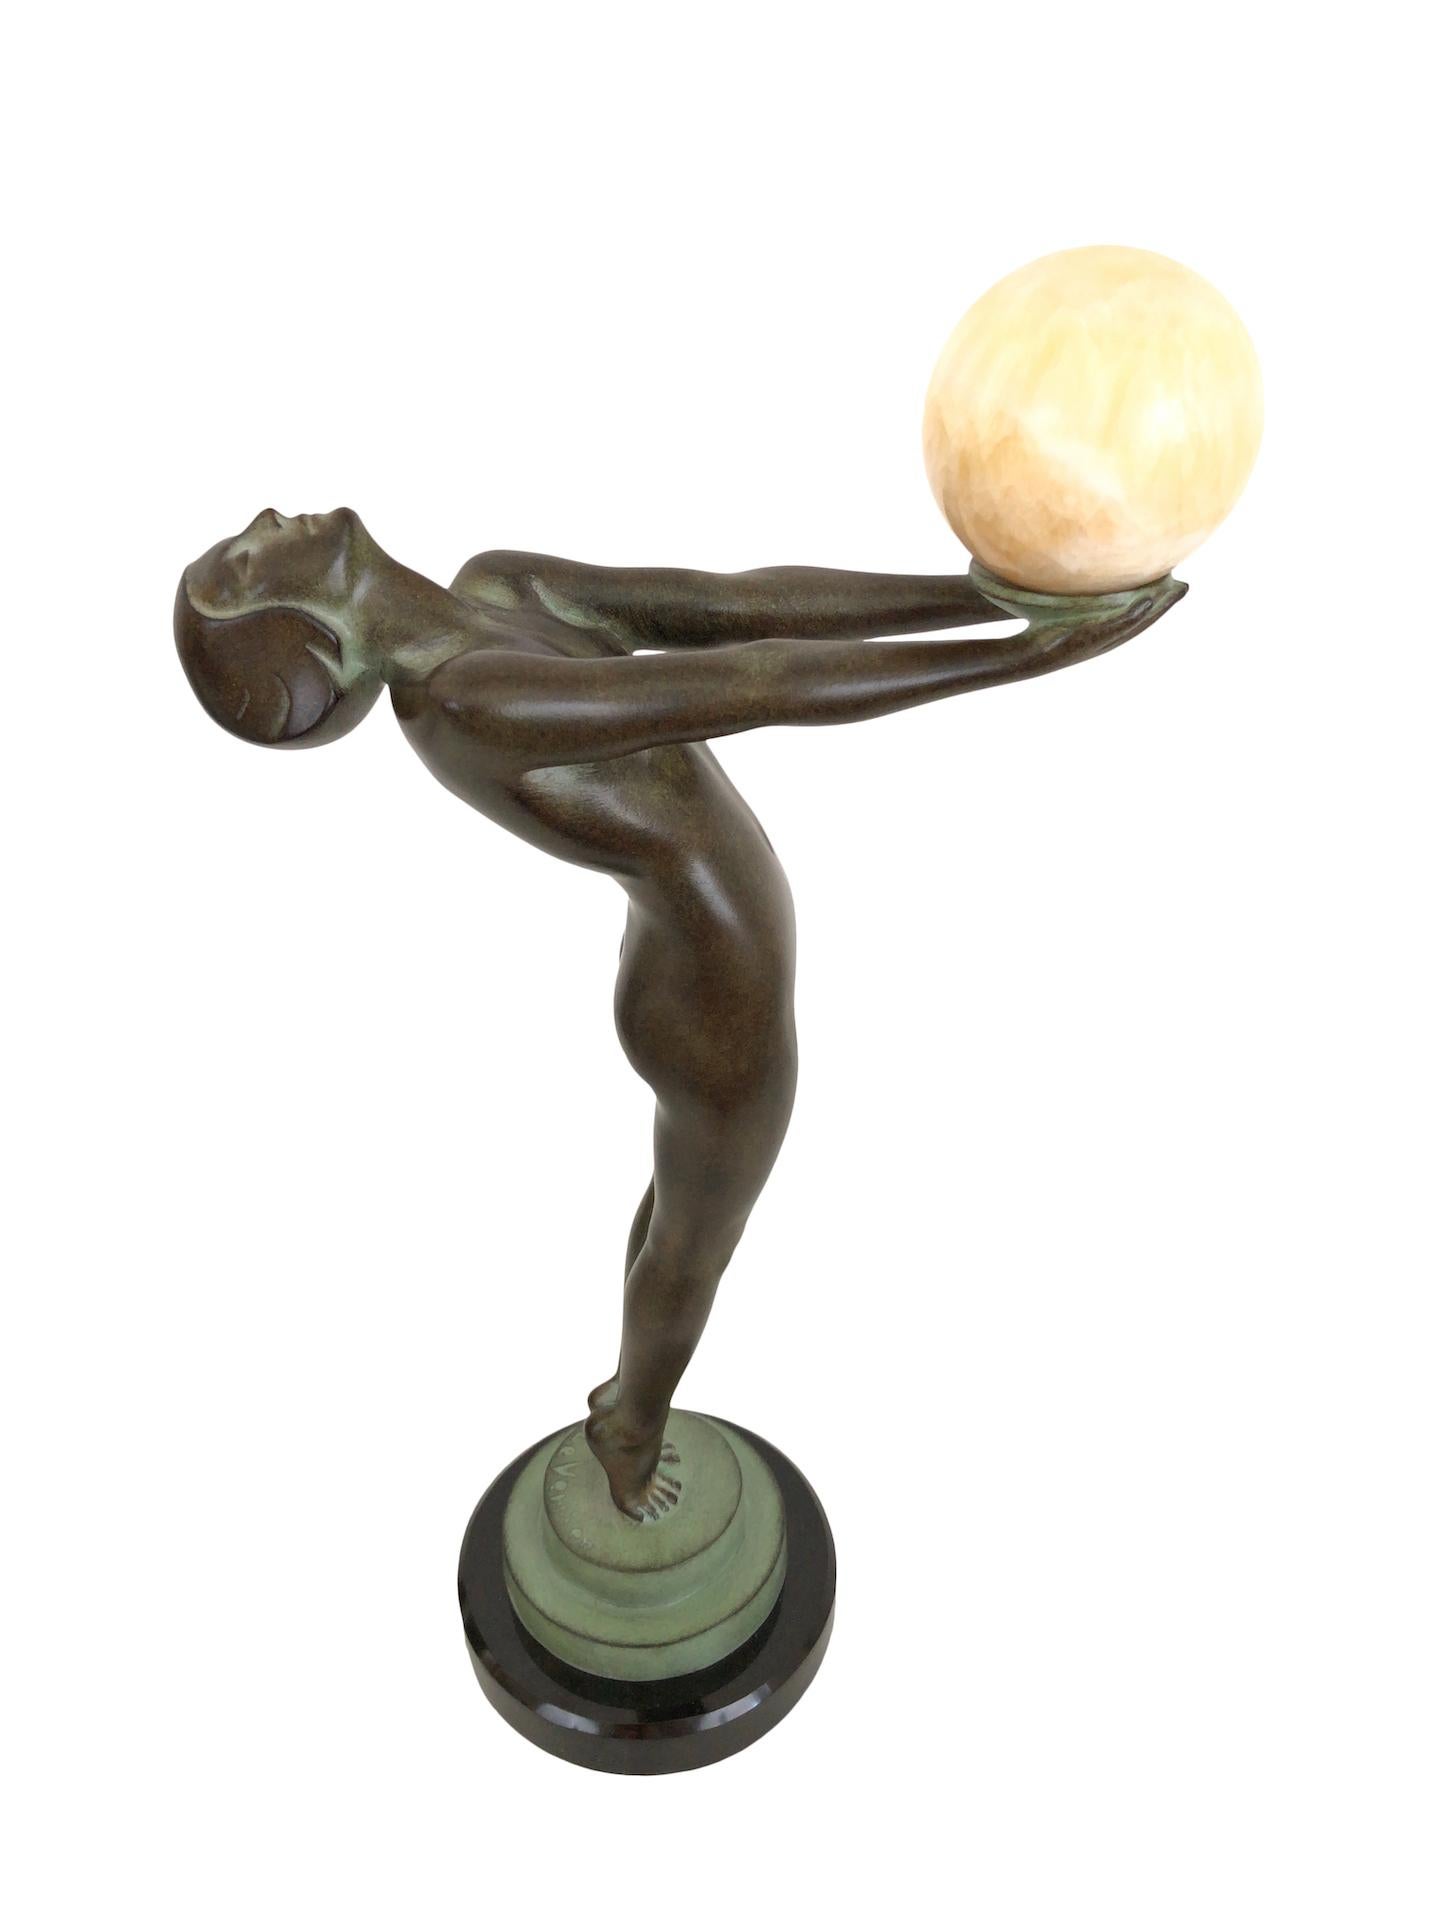 French Art Deco Style Dancer Sculpture Clarté with Jade Ball Original Max Le Verrier